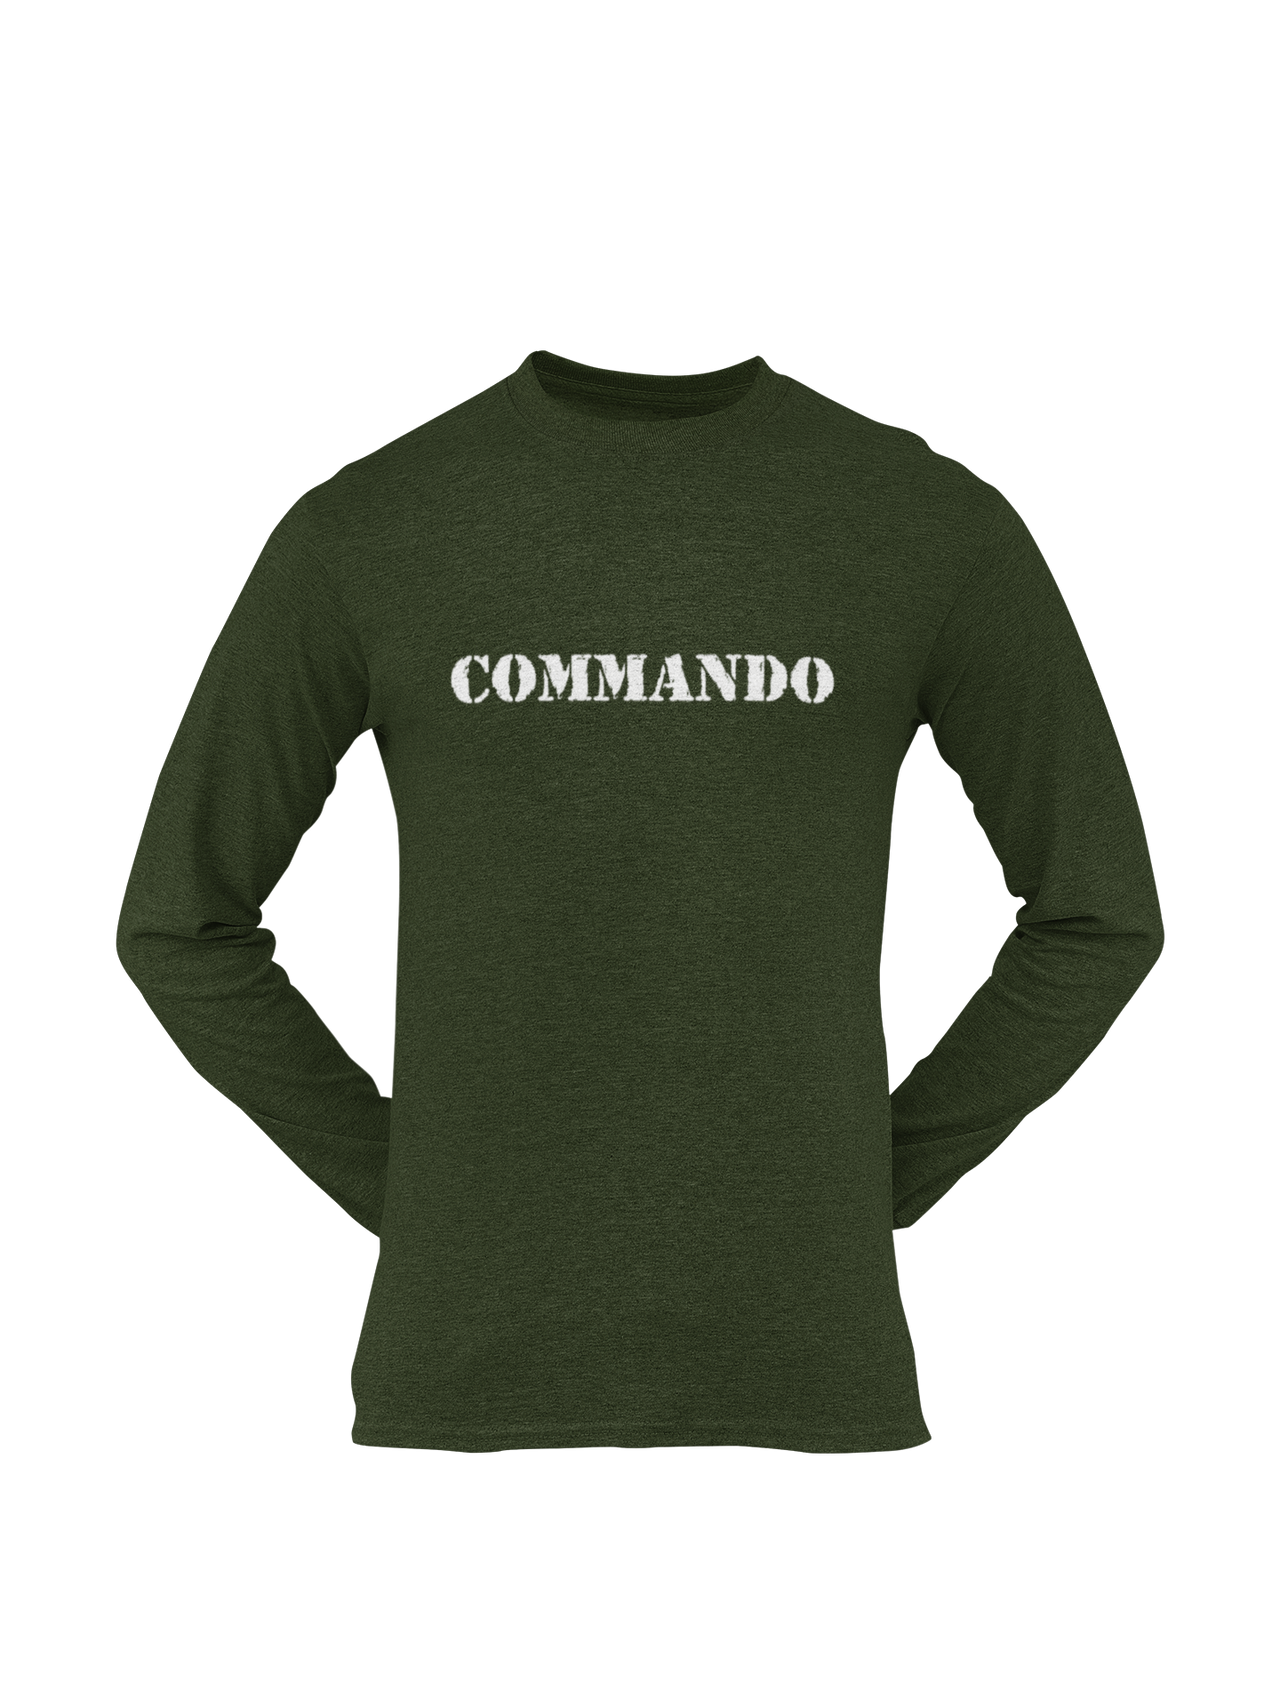 Commando T-shirt - Commando (Men)